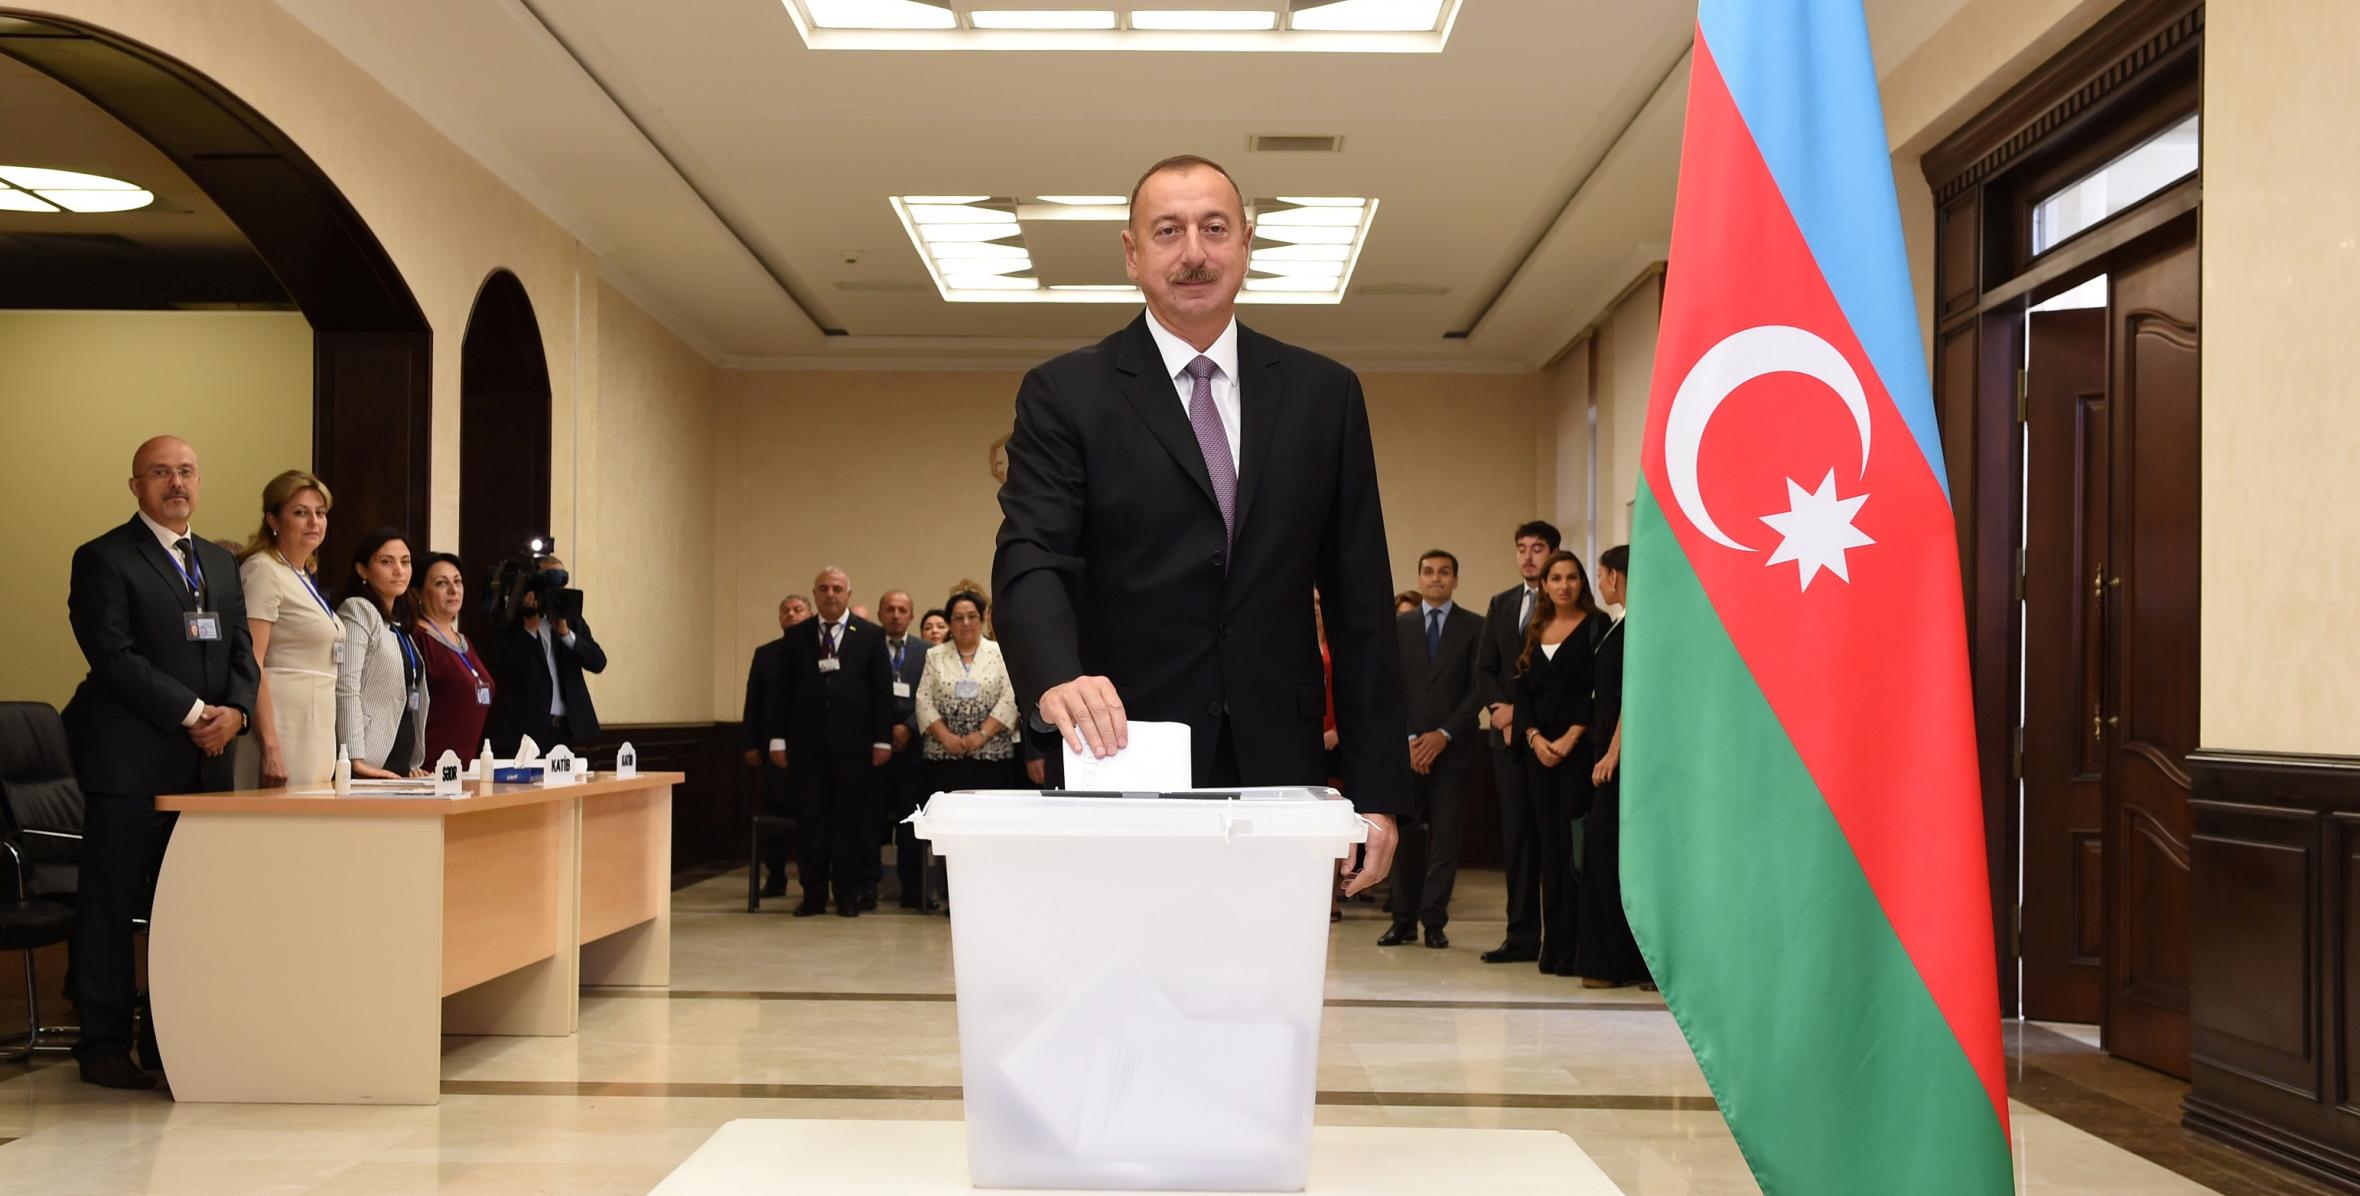 Ilham Aliyev voted at polling station No.6